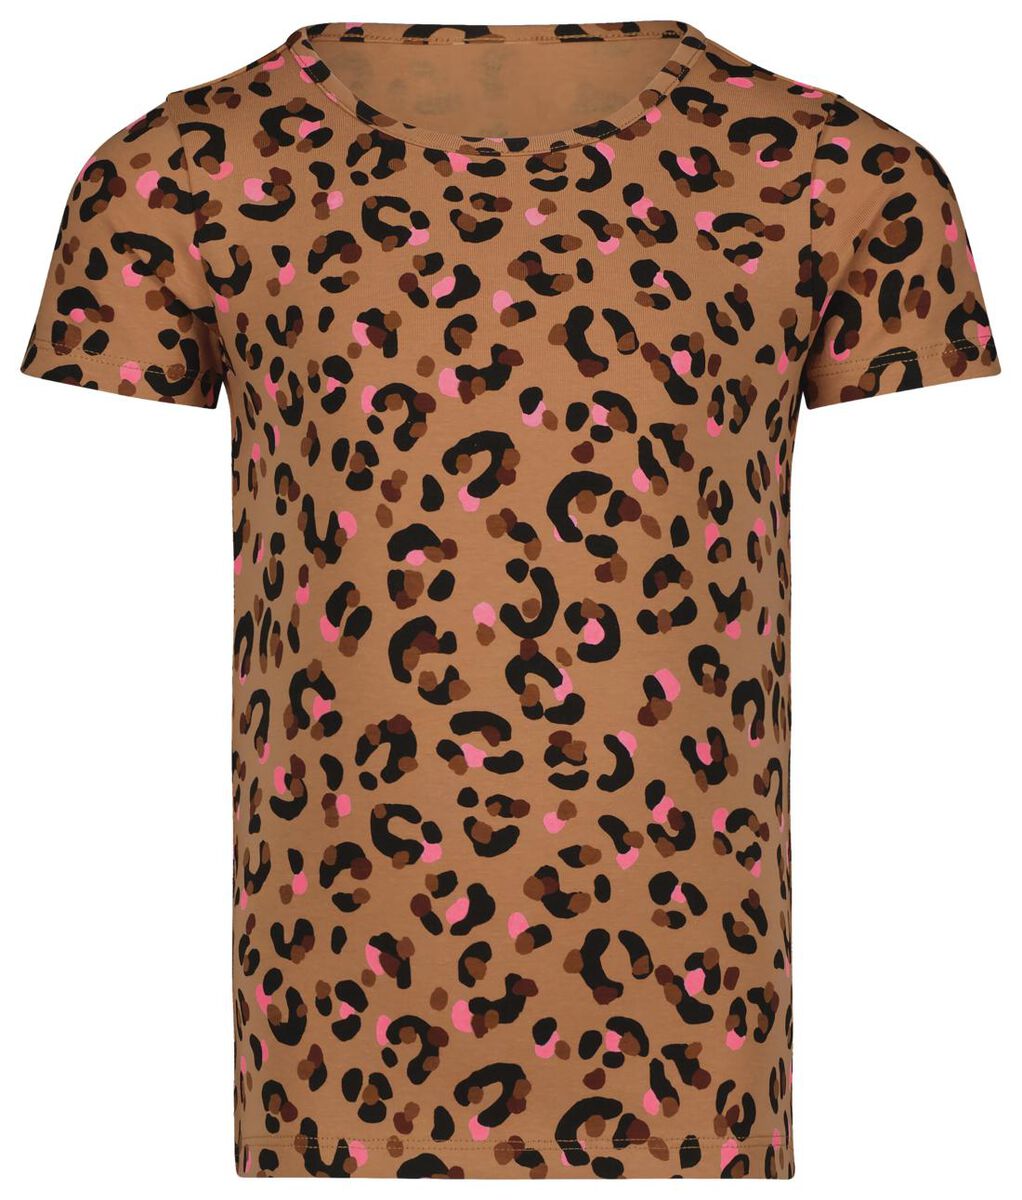 kinder t-shirt animal bruin - 1000027920 - HEMA